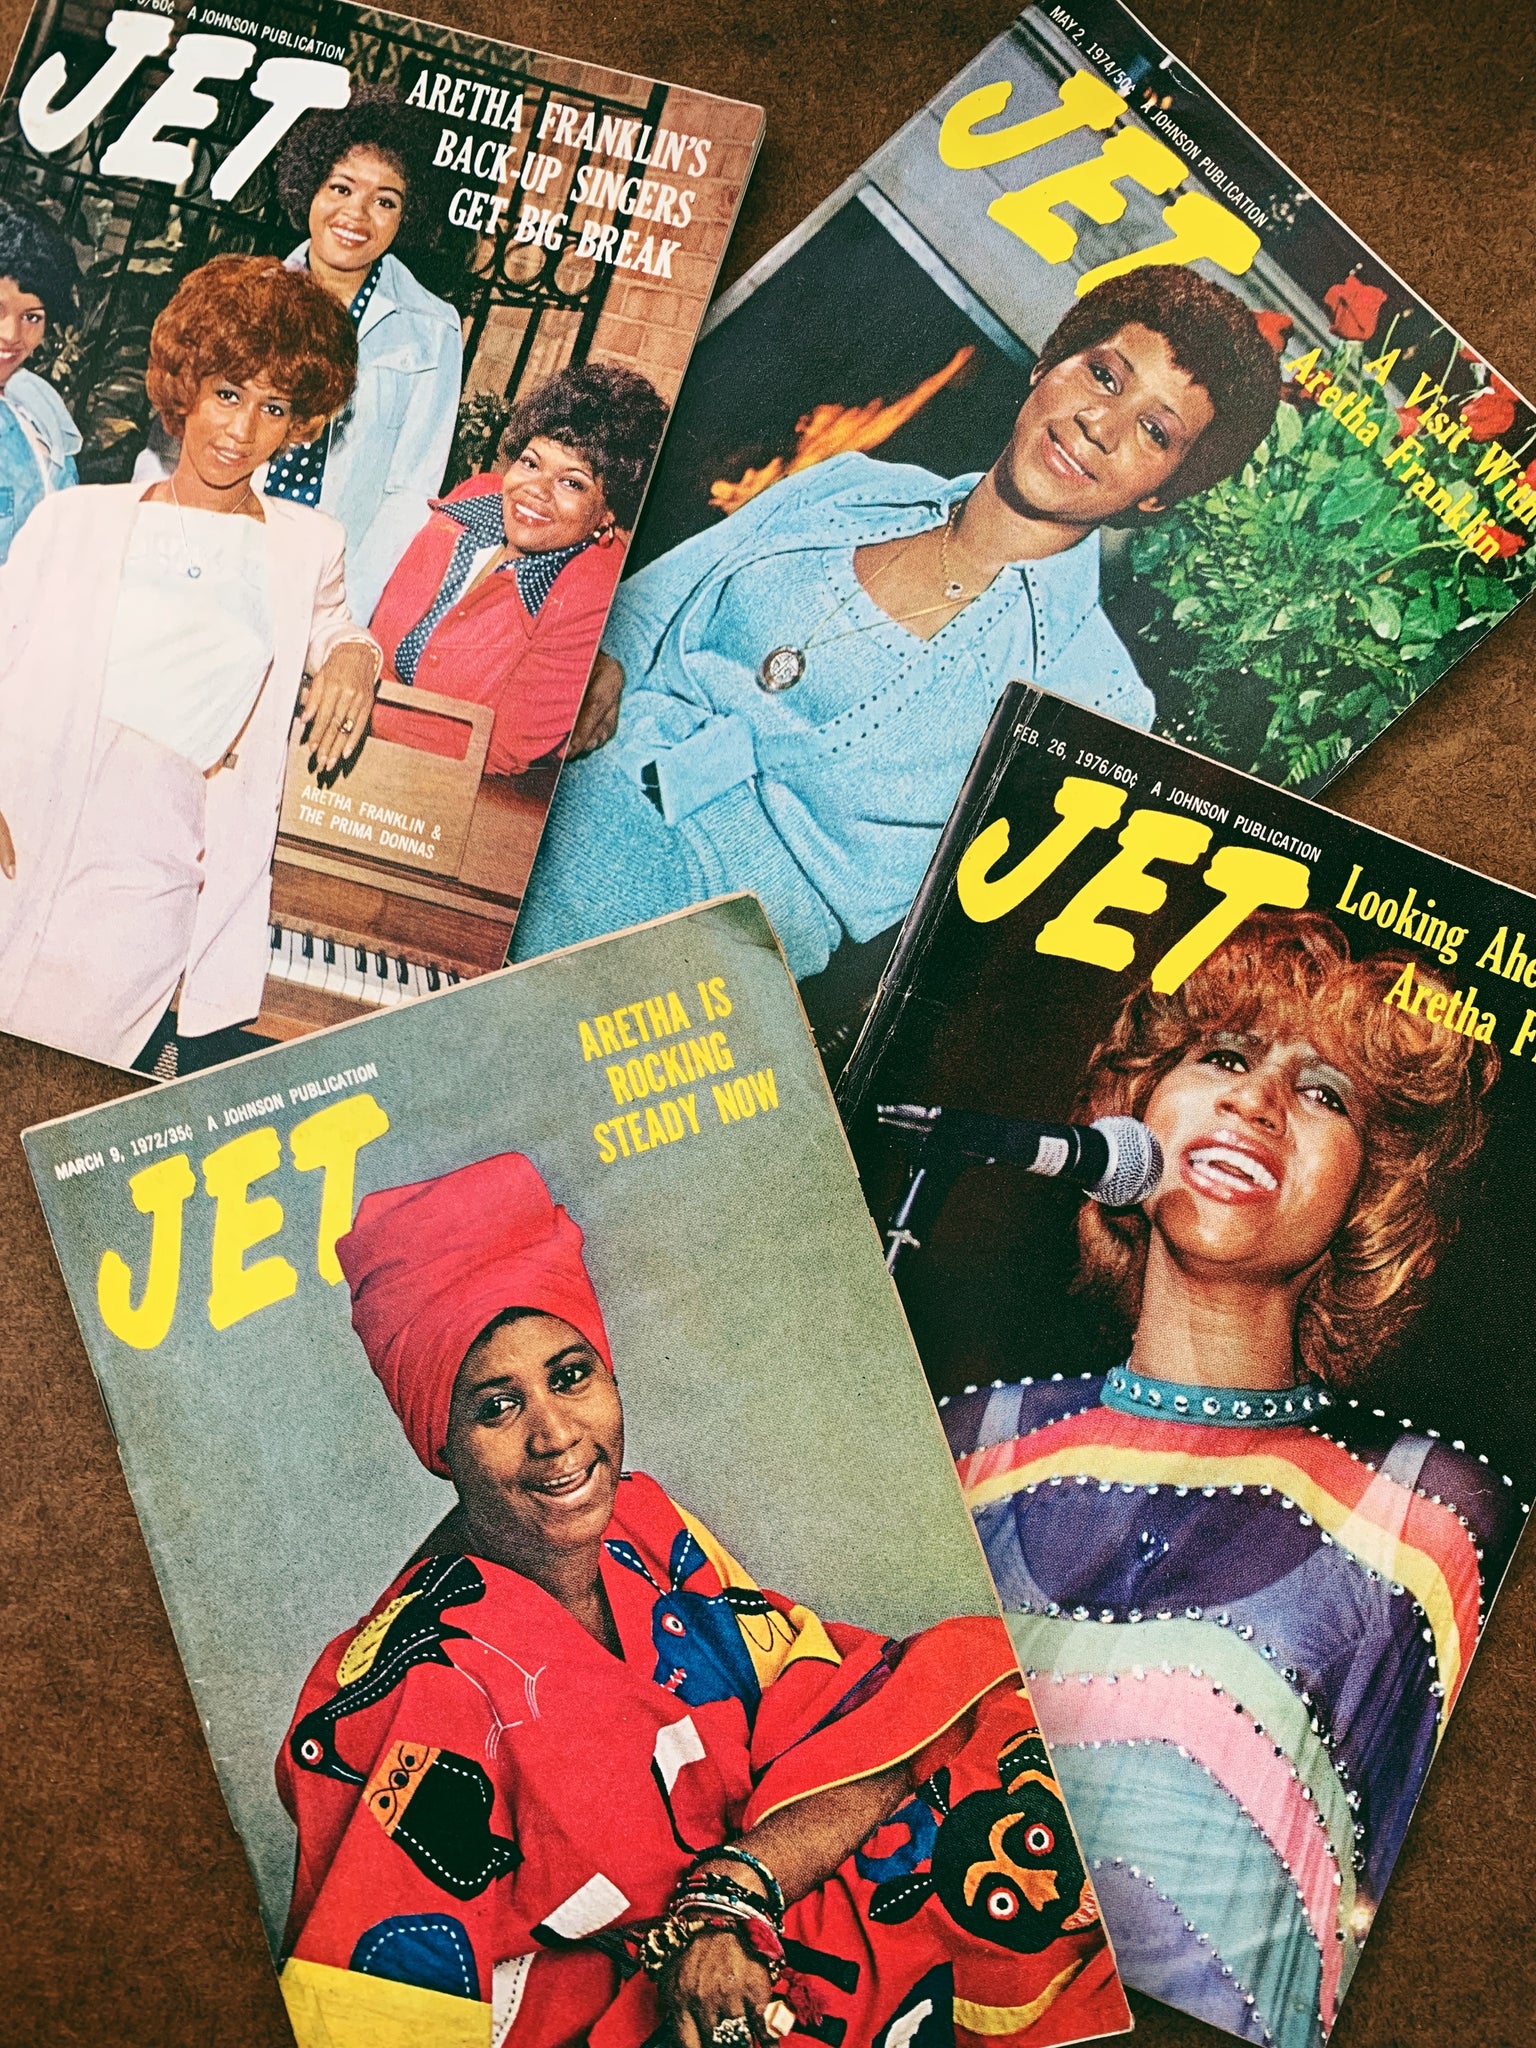 Vintage Jet Magazines — Aretha Franklin covers (1972-1976)